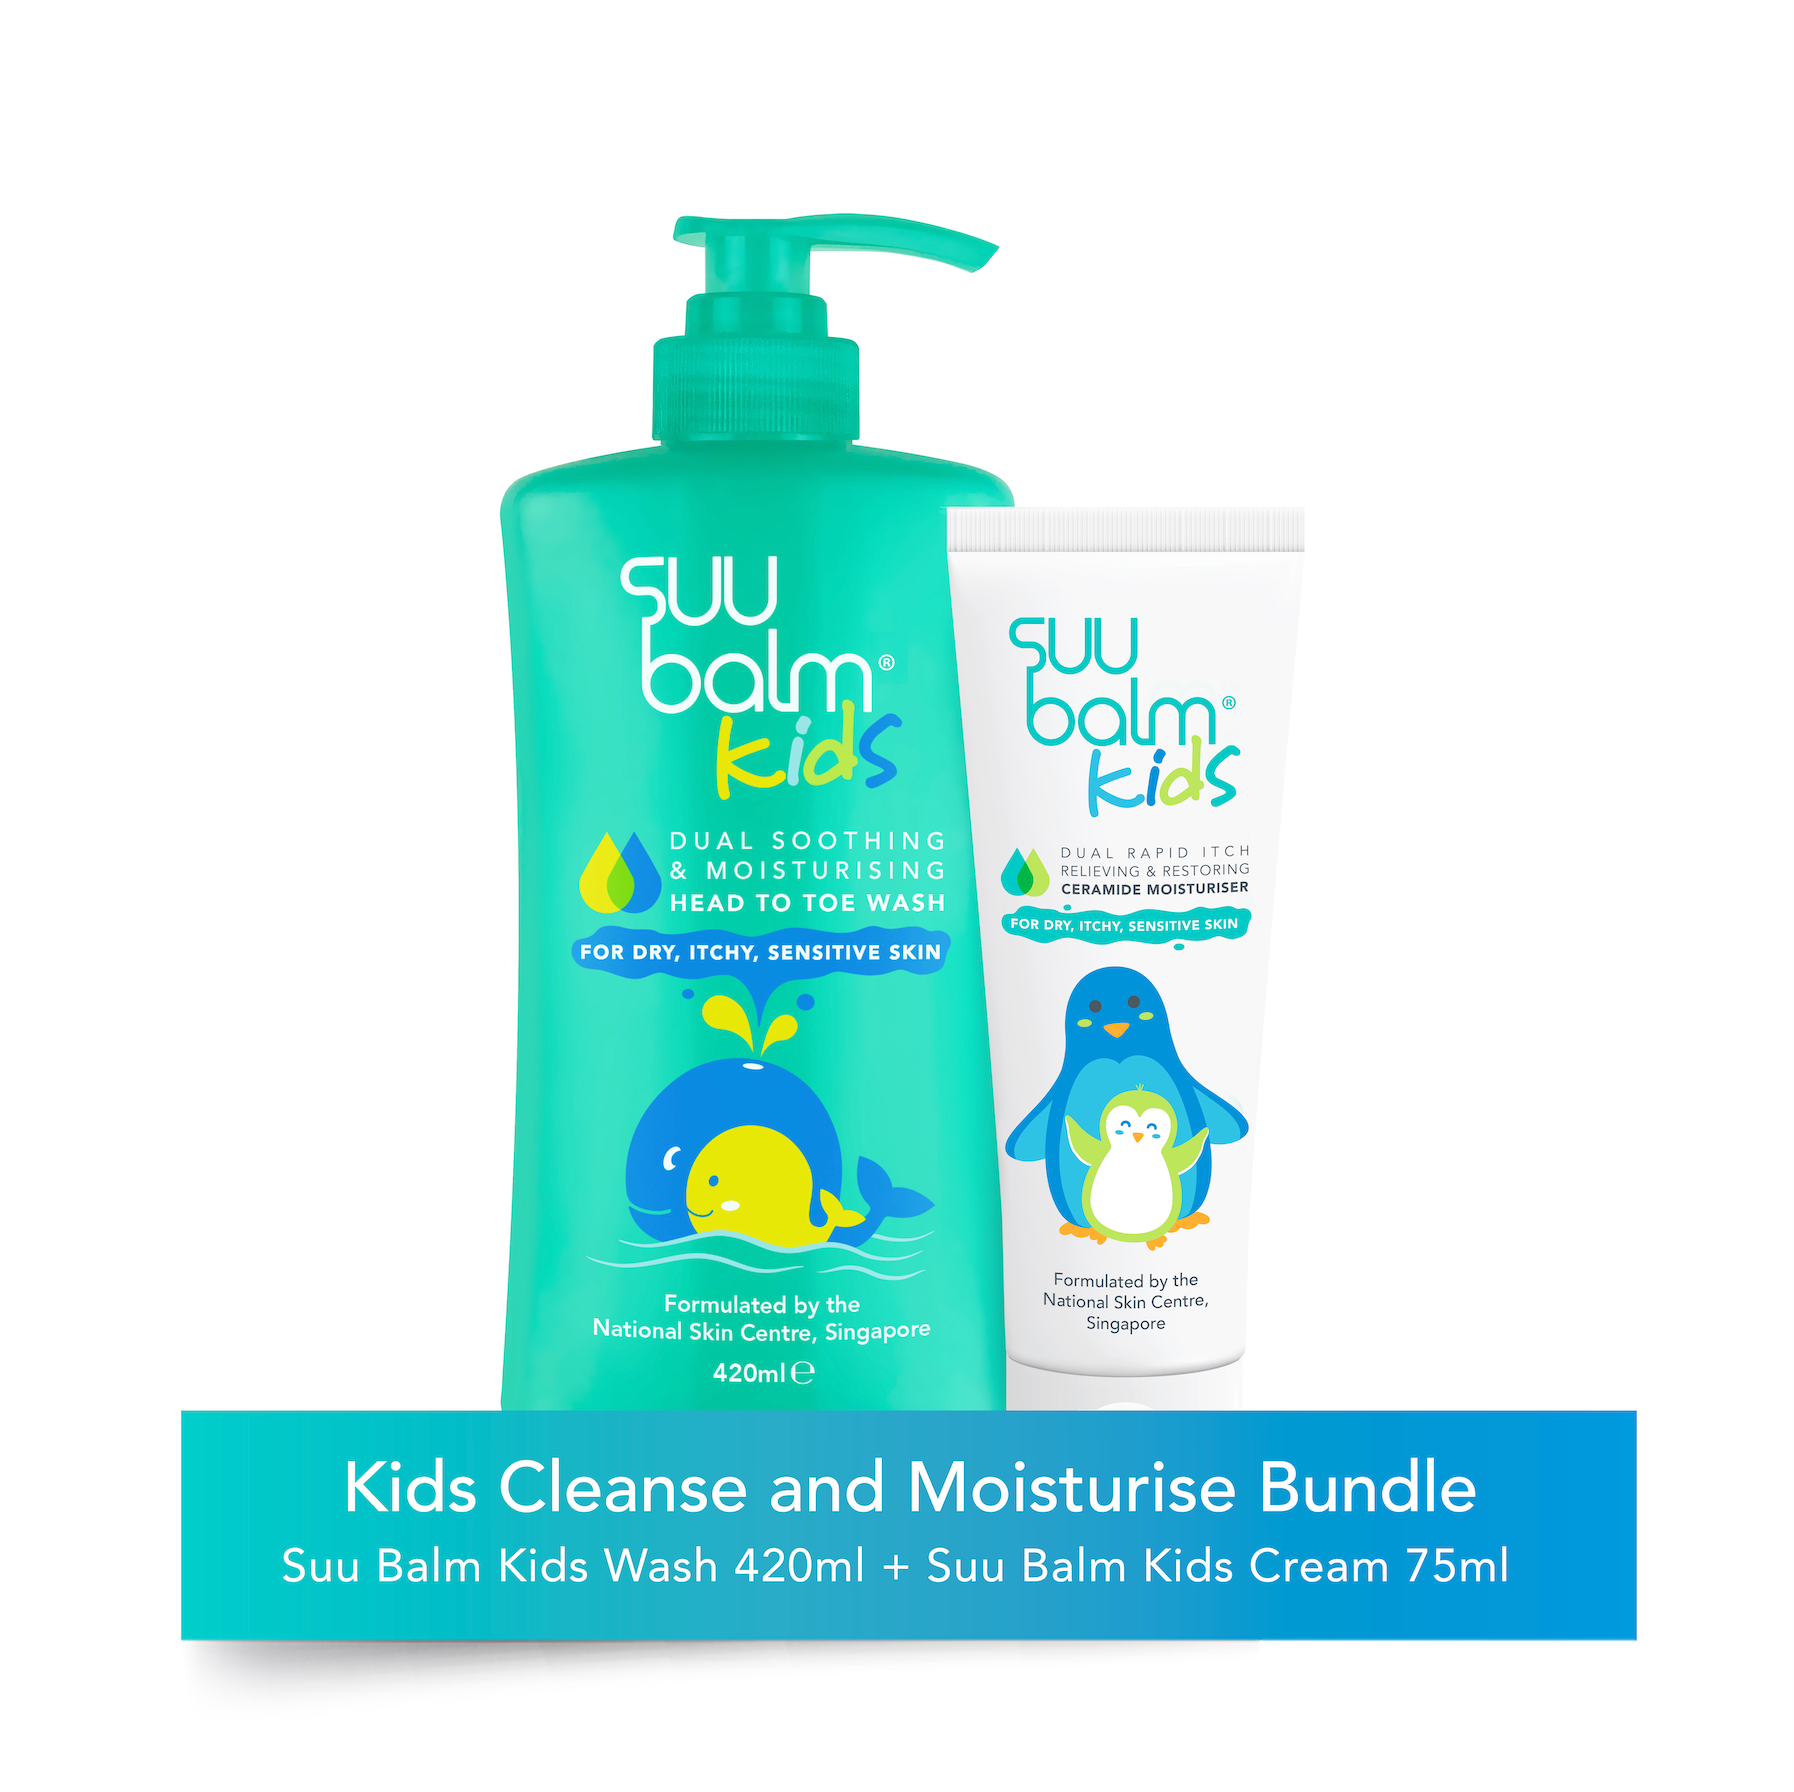 Suu Balm® Kids Cleanse and Moisturise Bundle - Kids Wash 420ml + Kids Cream 75ml